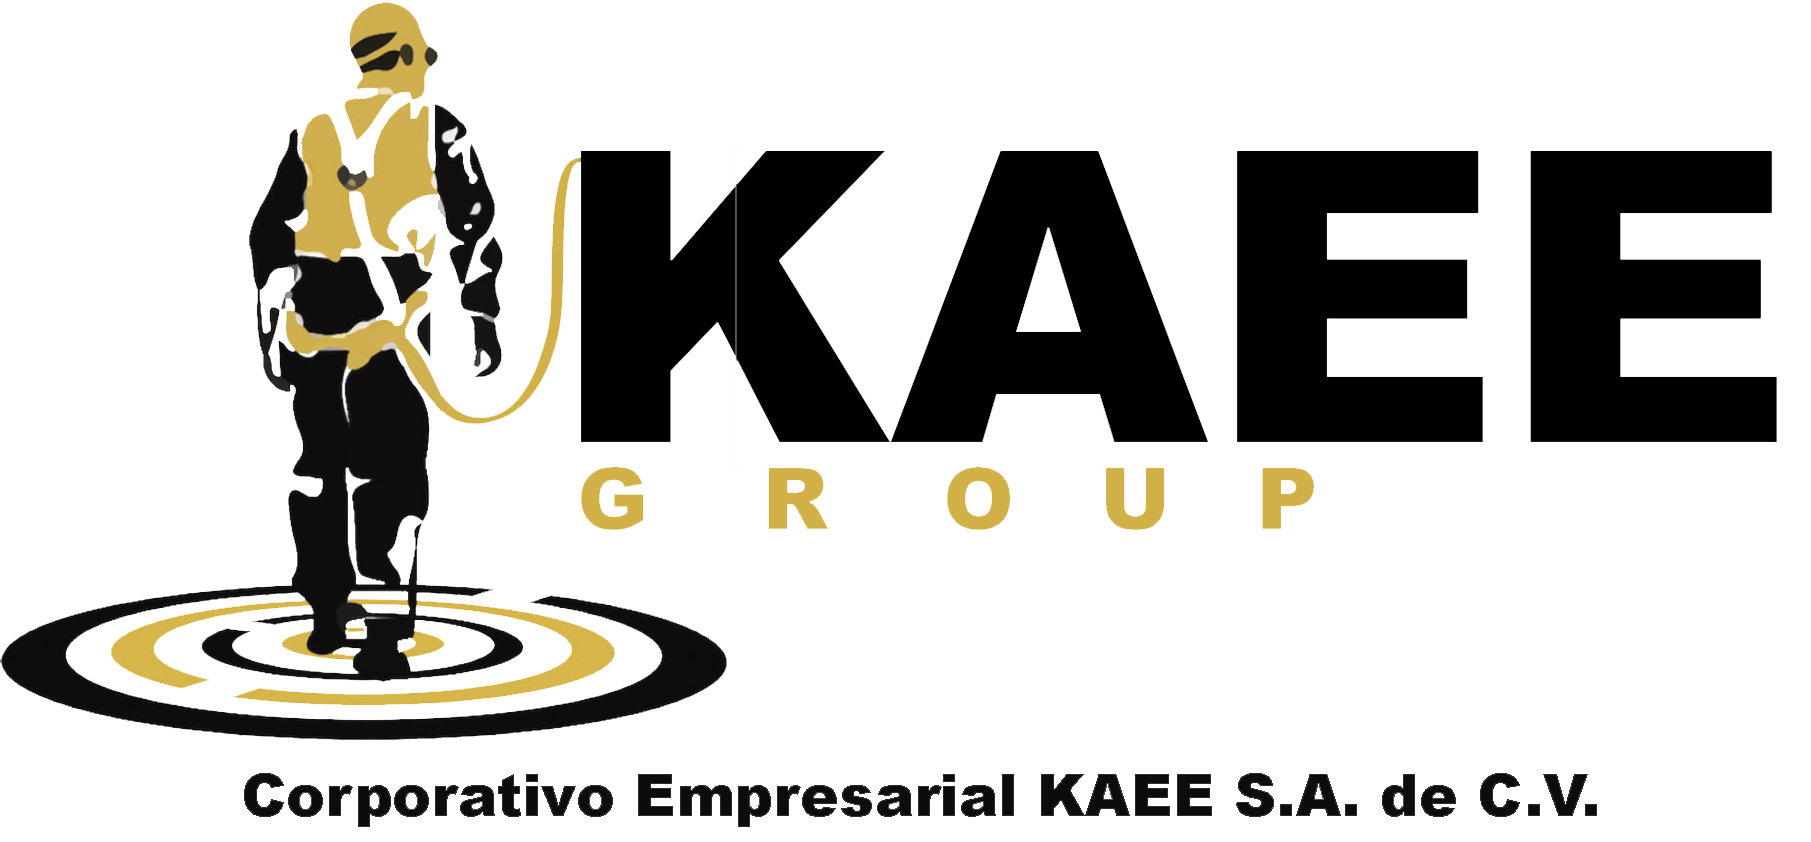 KAEE Group